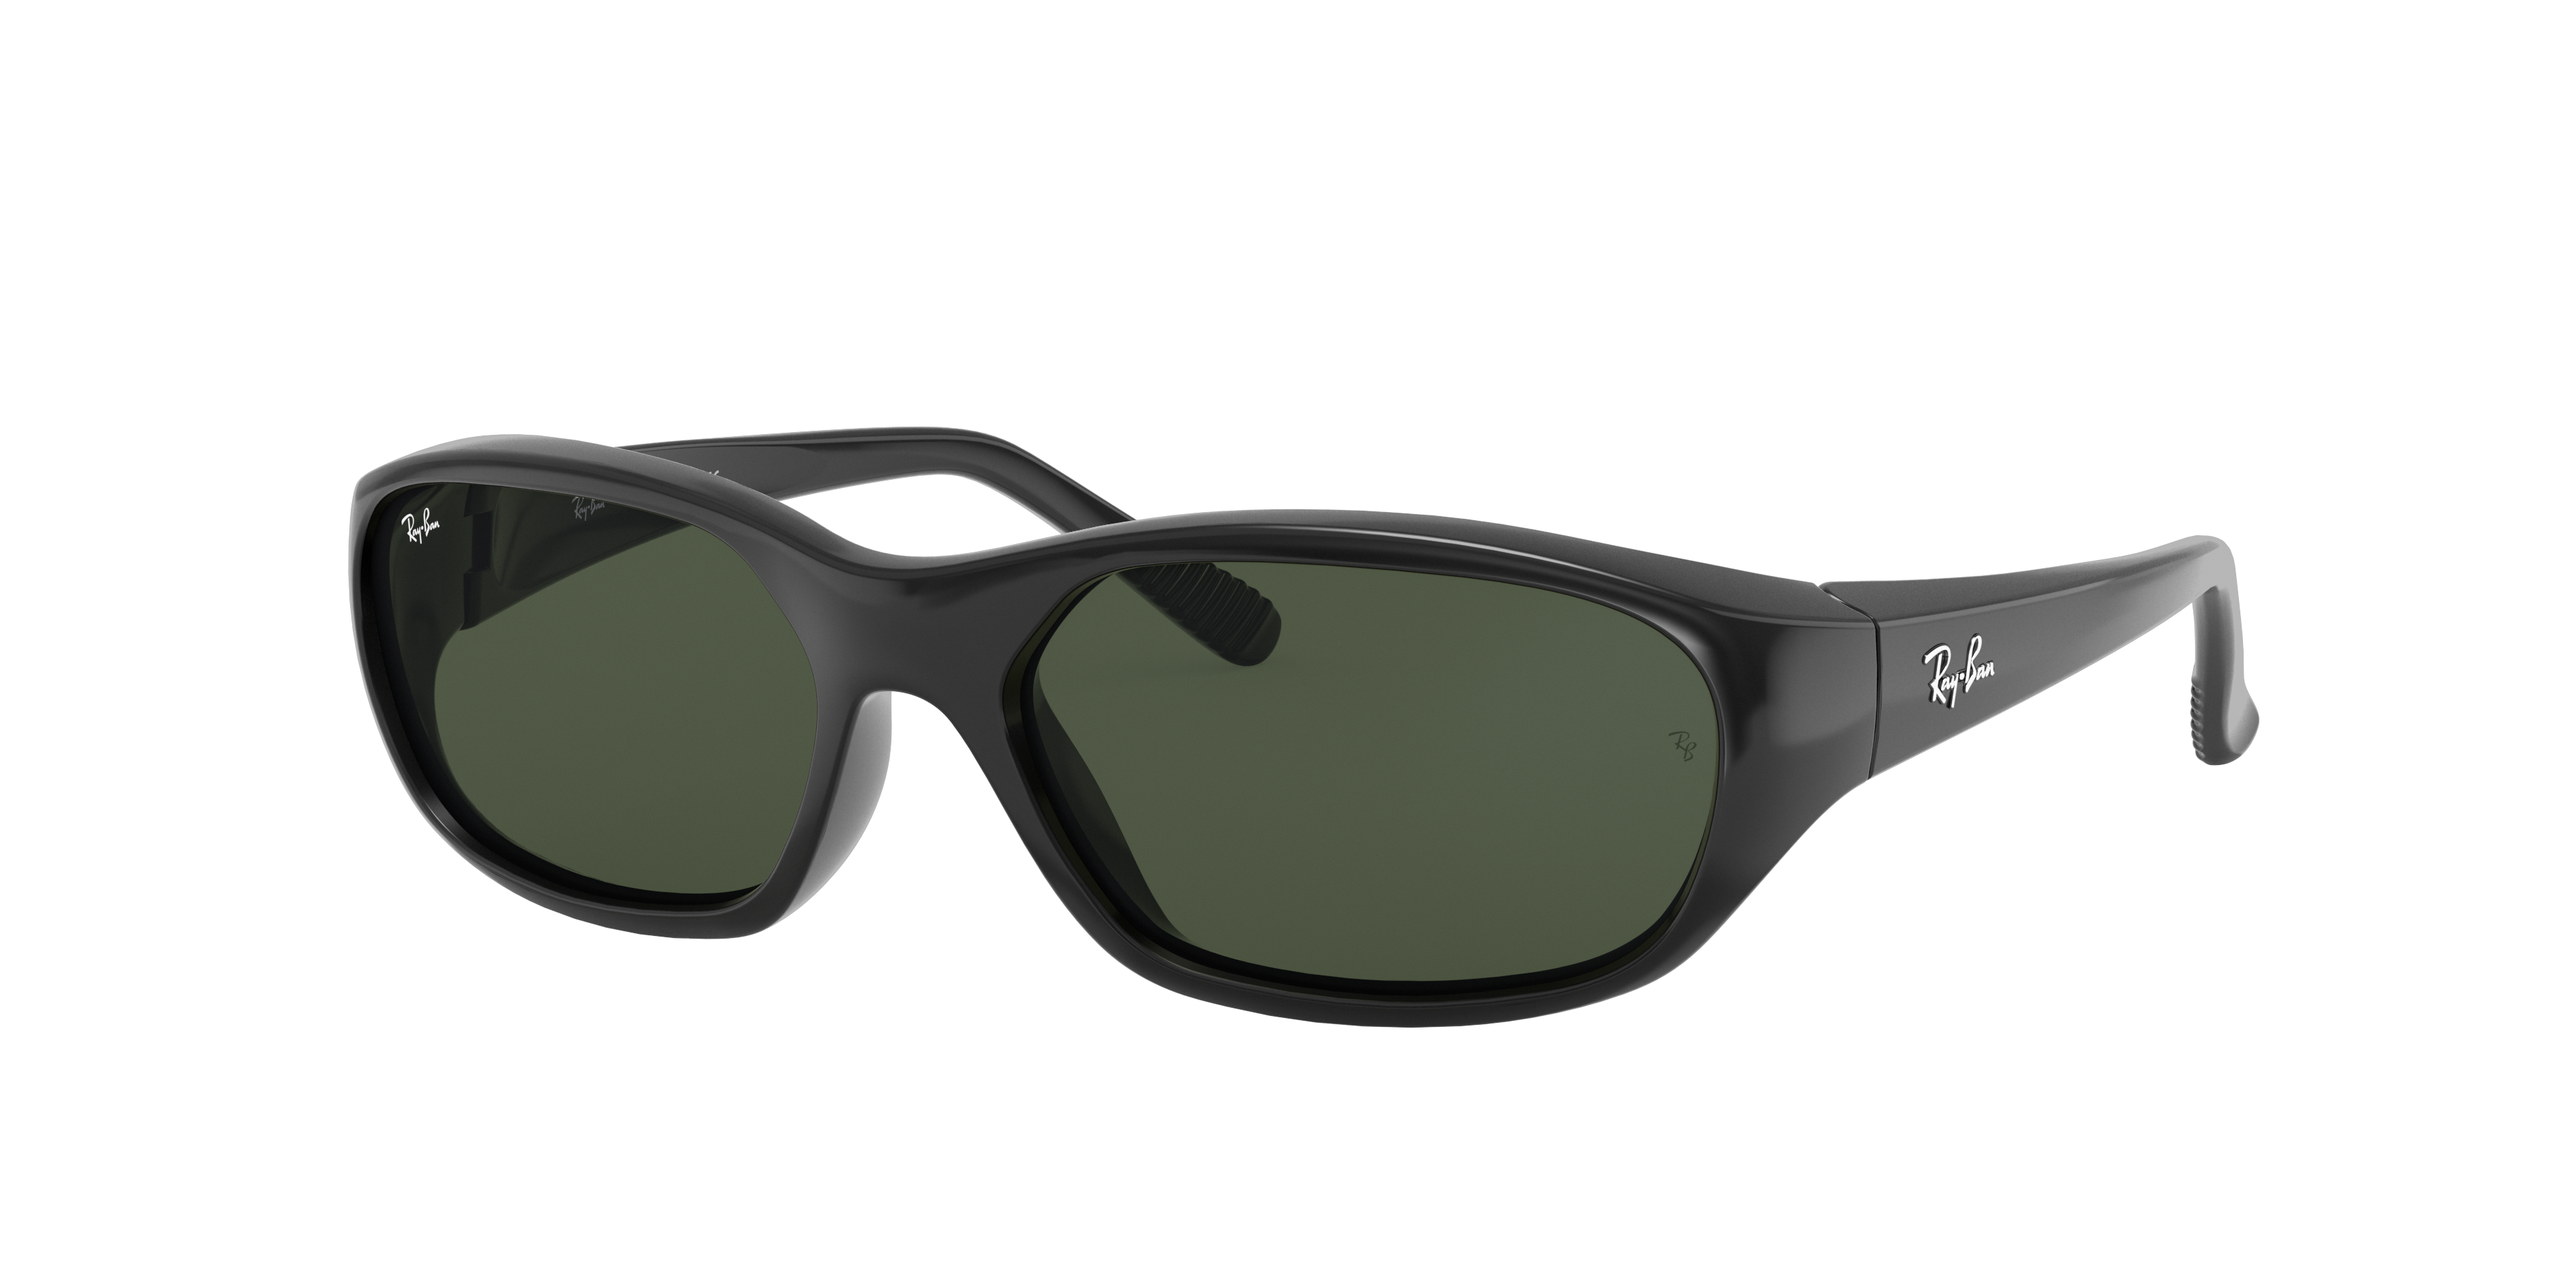 Kietelen besluiten Thermisch Daddy-o Ii Sunglasses in Black and Green | Ray-Ban®